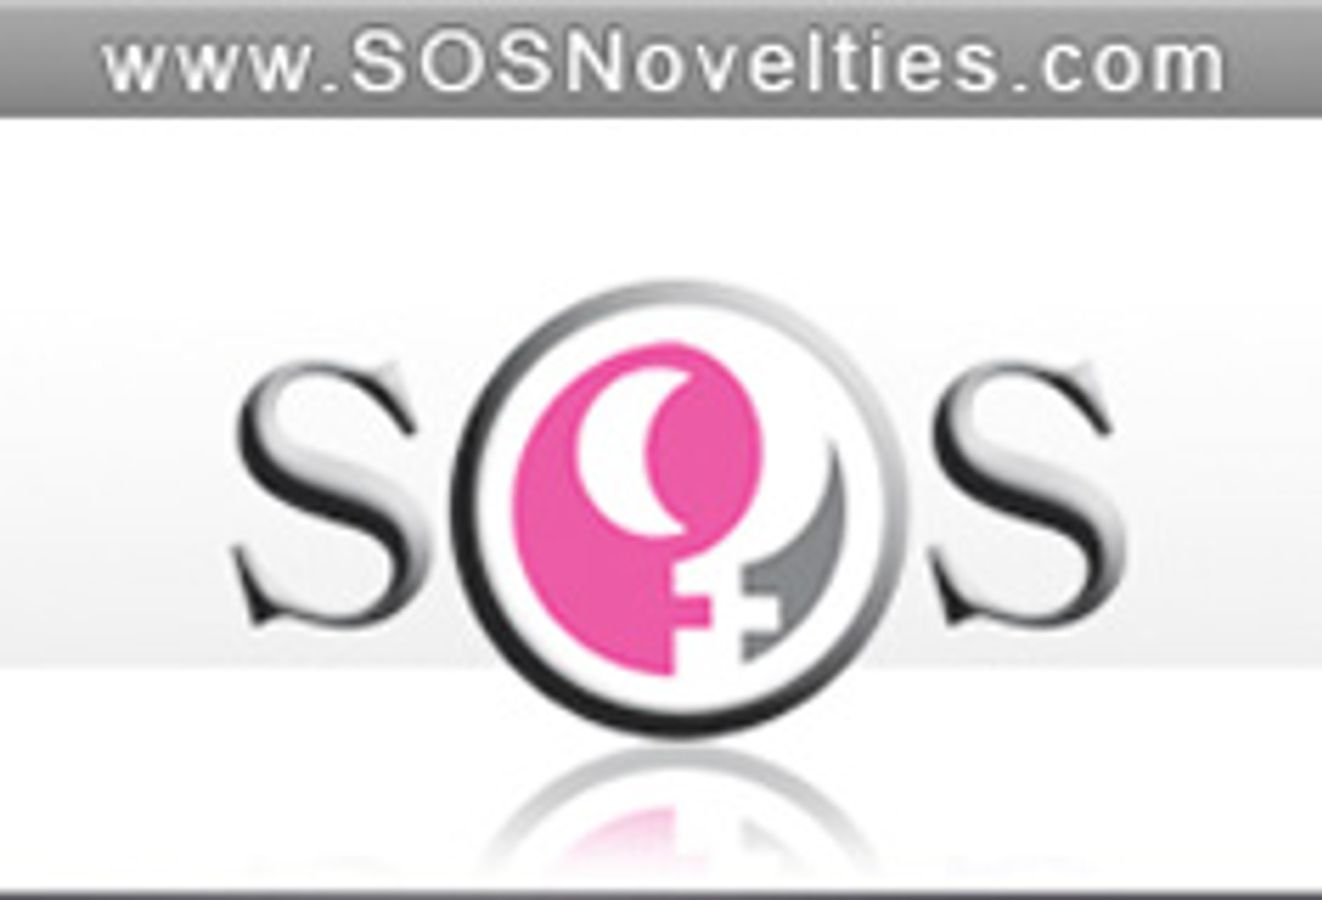 SOS Novelties